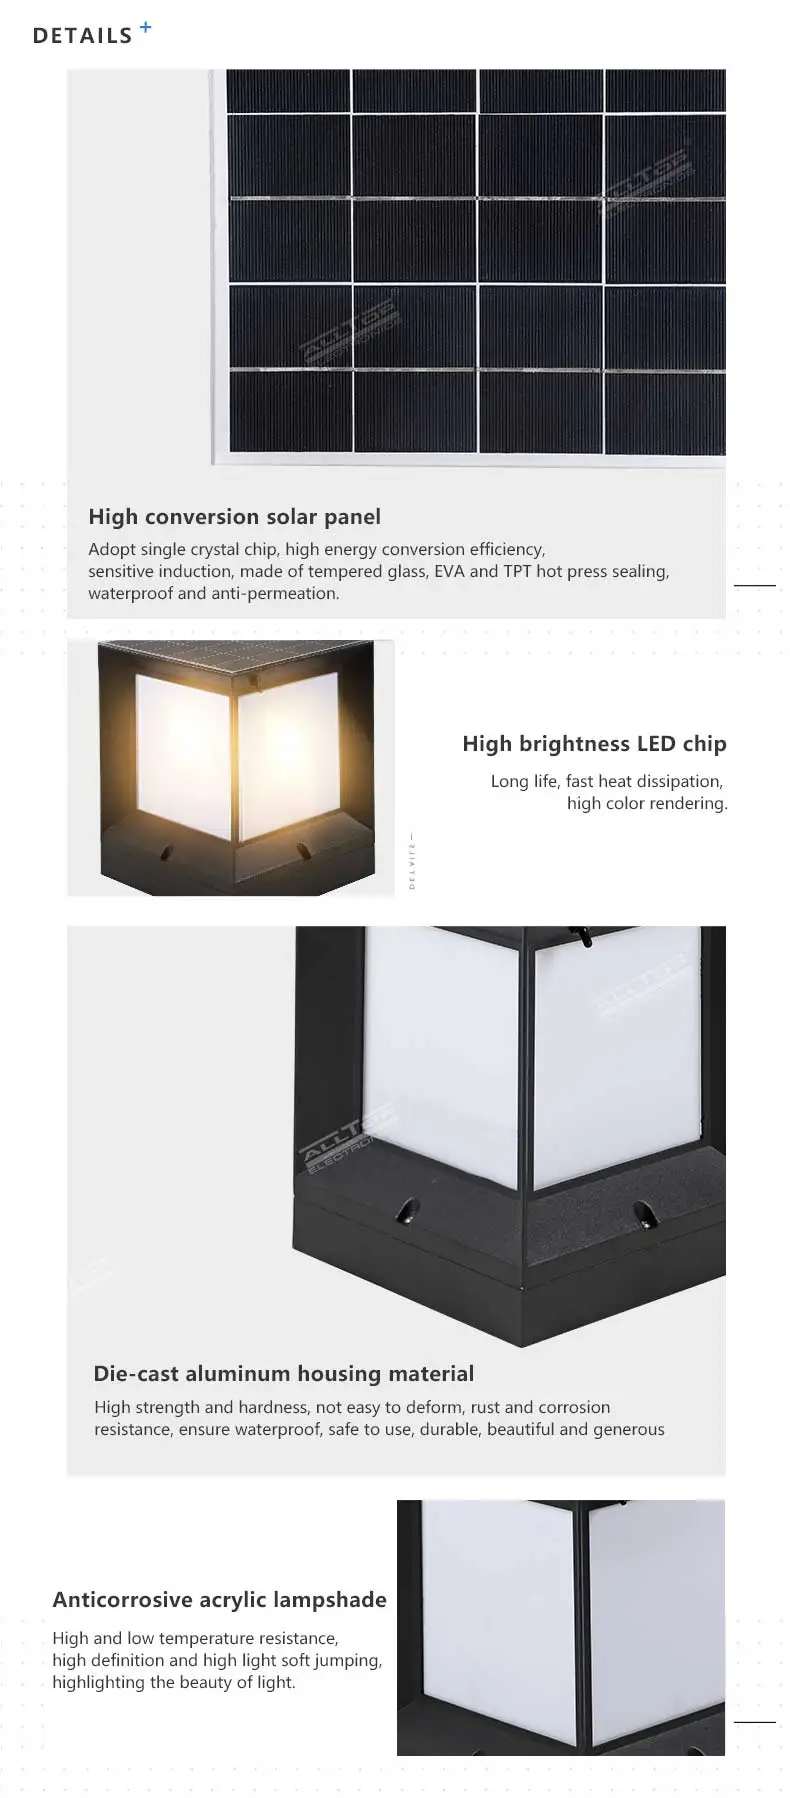 ALLTOP Modern design double light source 3w waterproof ip65 solar power outdoor garden light led